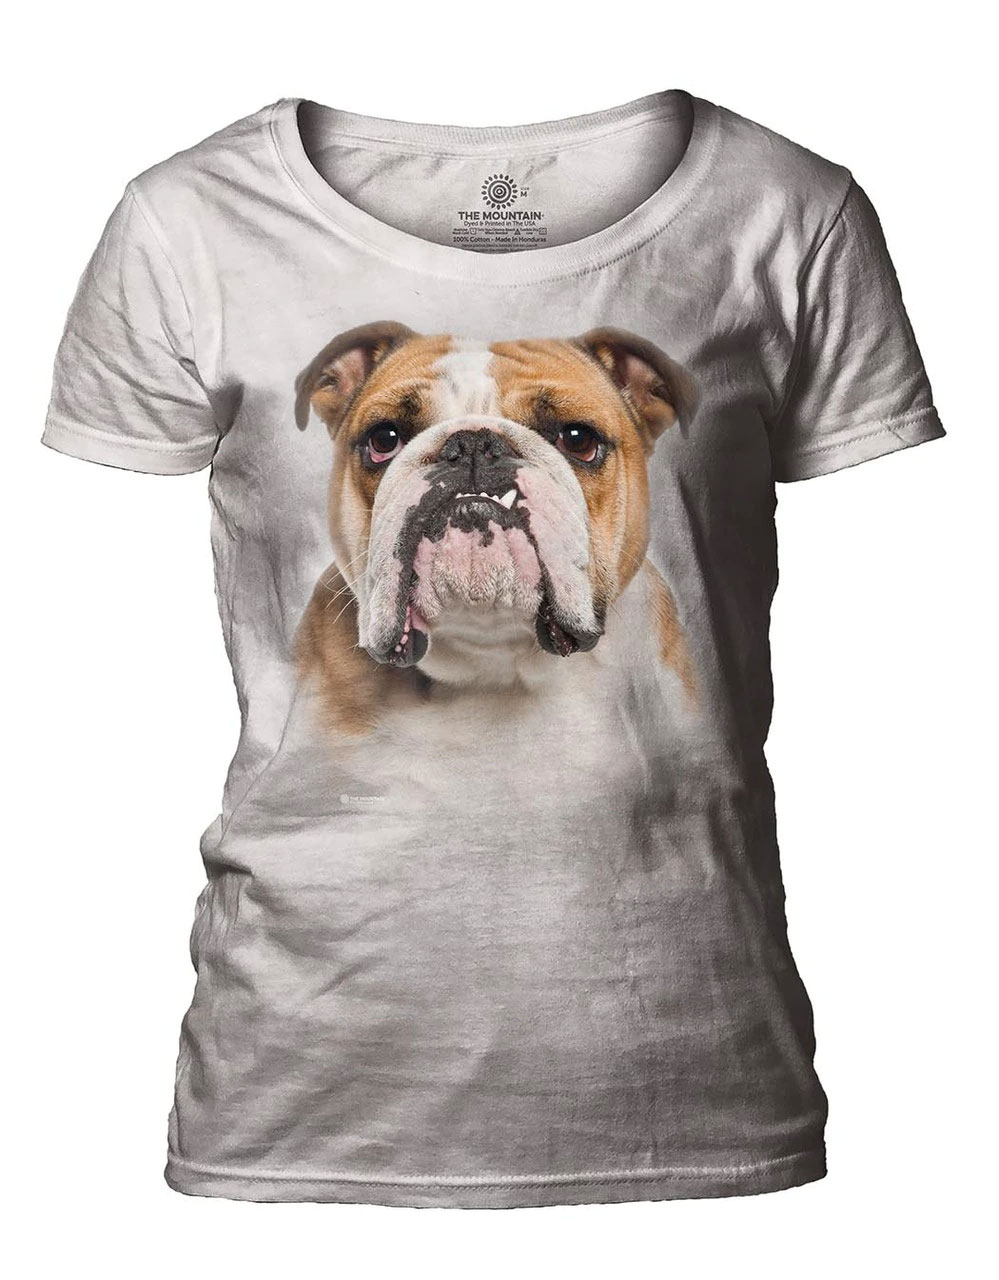 It's a Bulldog Portrait Women's Scoop T-shirt